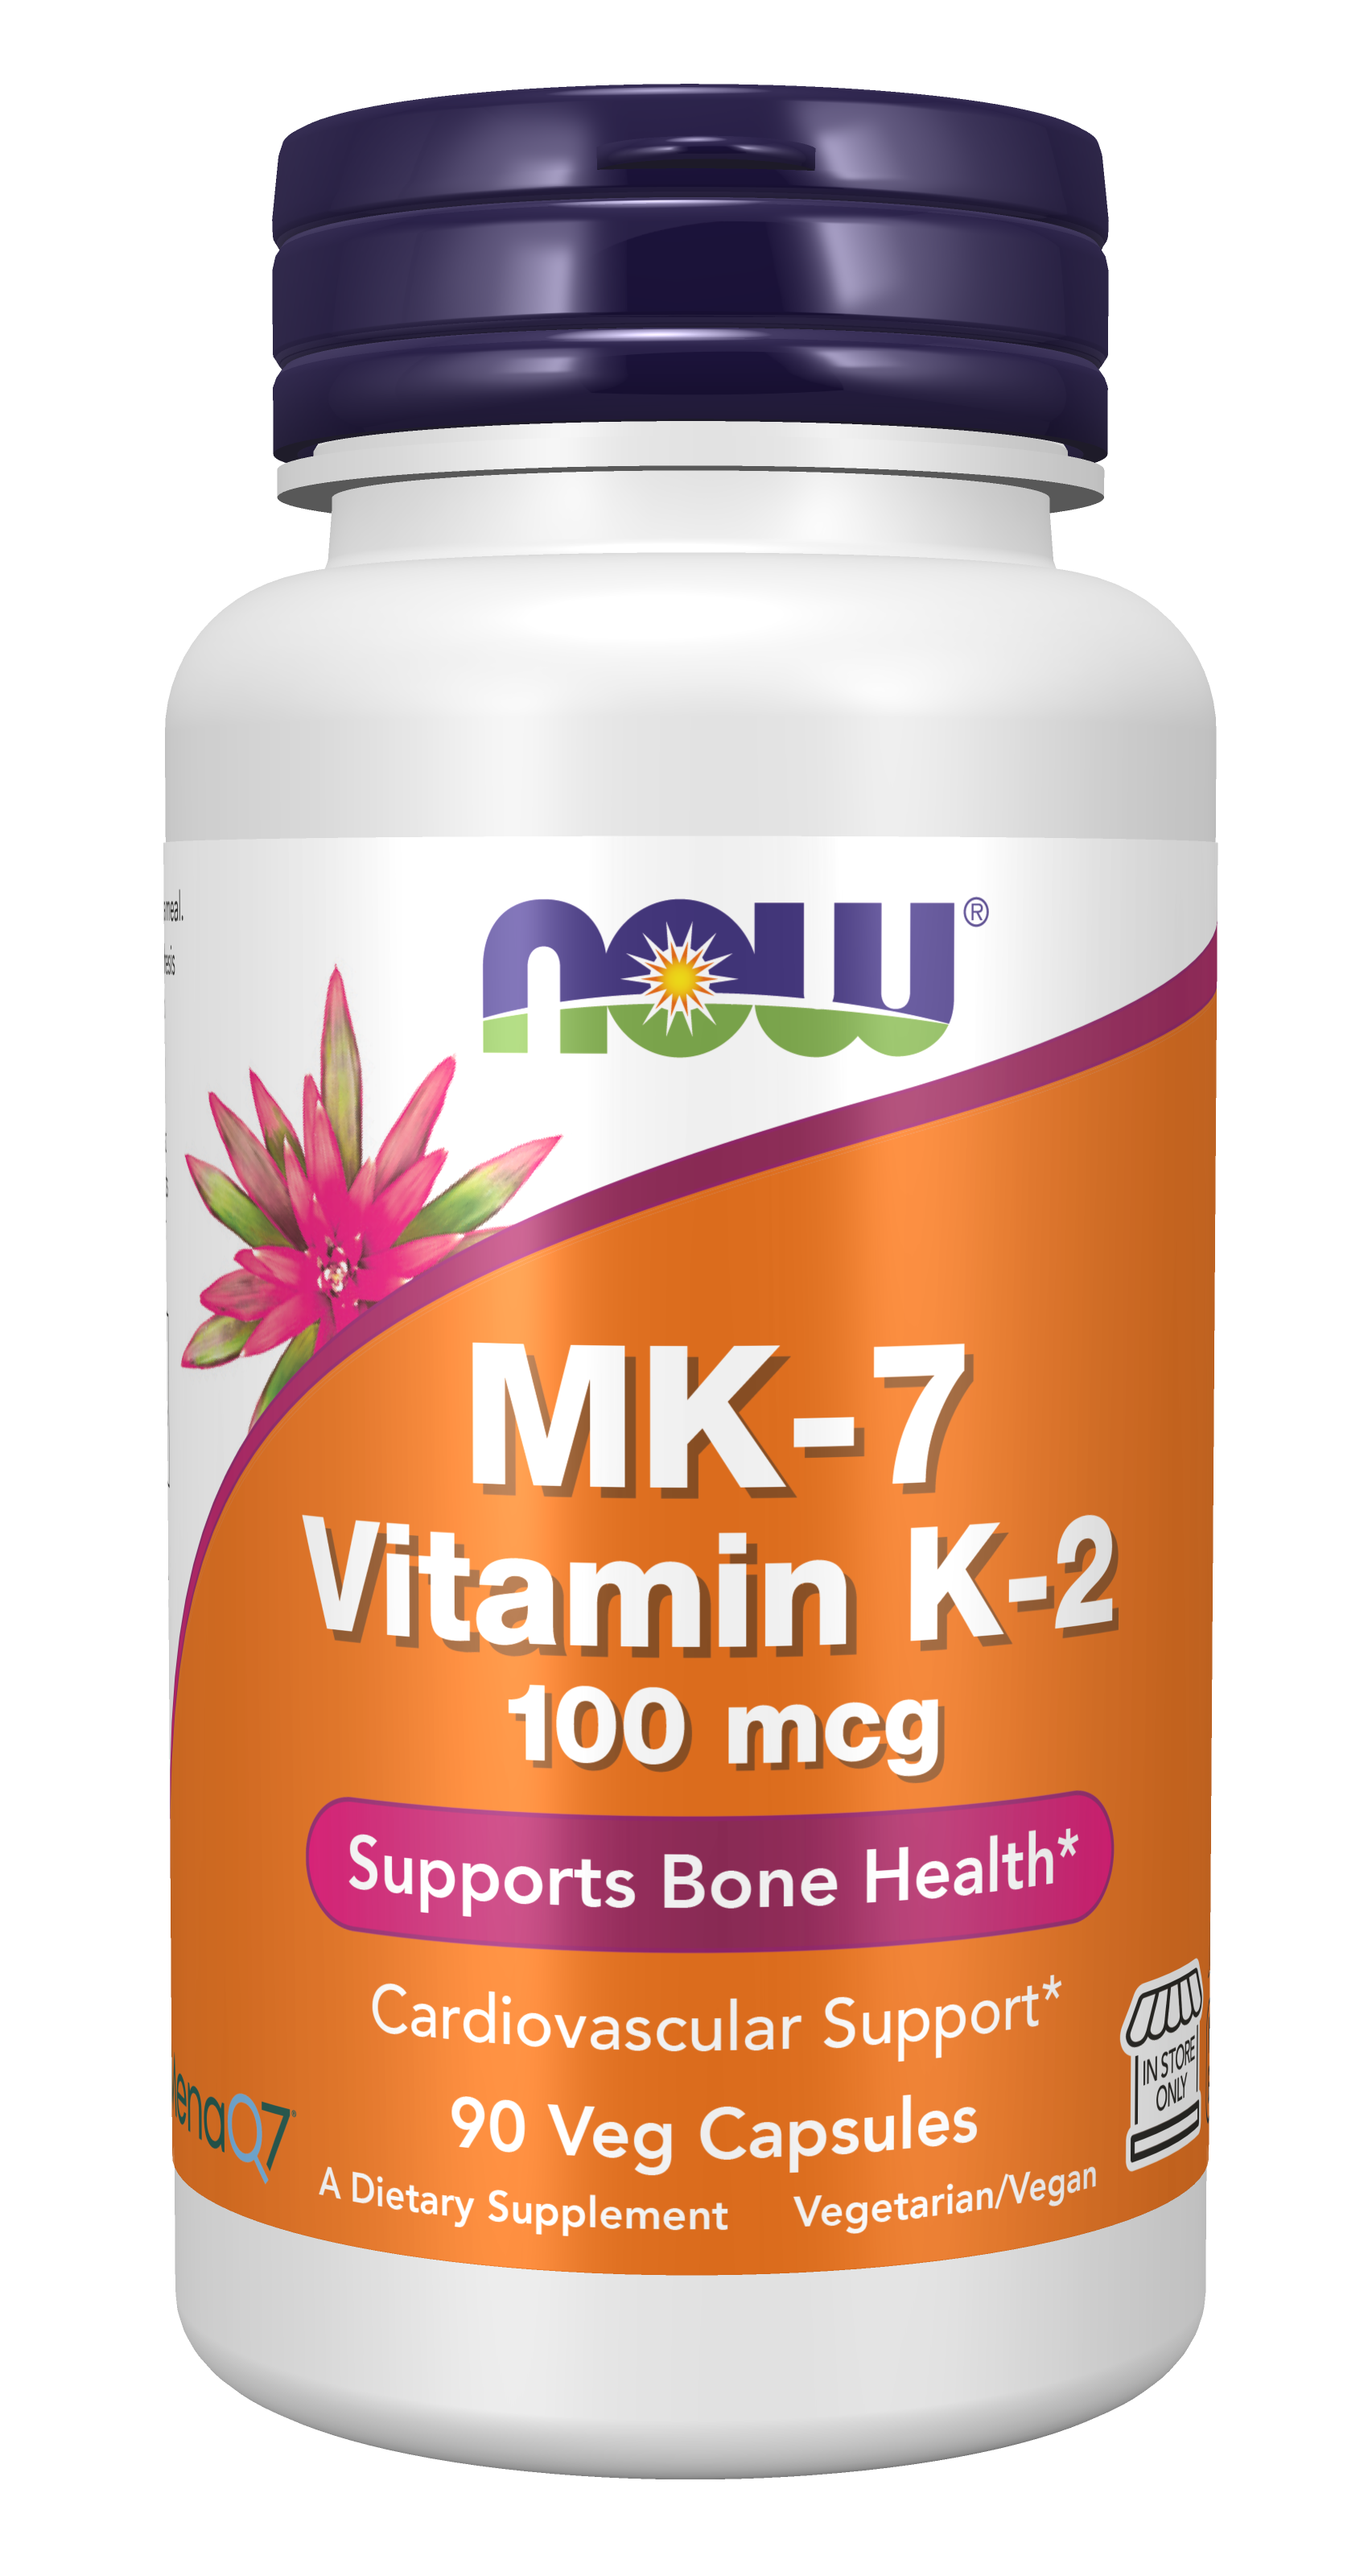 MK-7 Vitamin K-2 100 mcg - 90 Veg Capsules